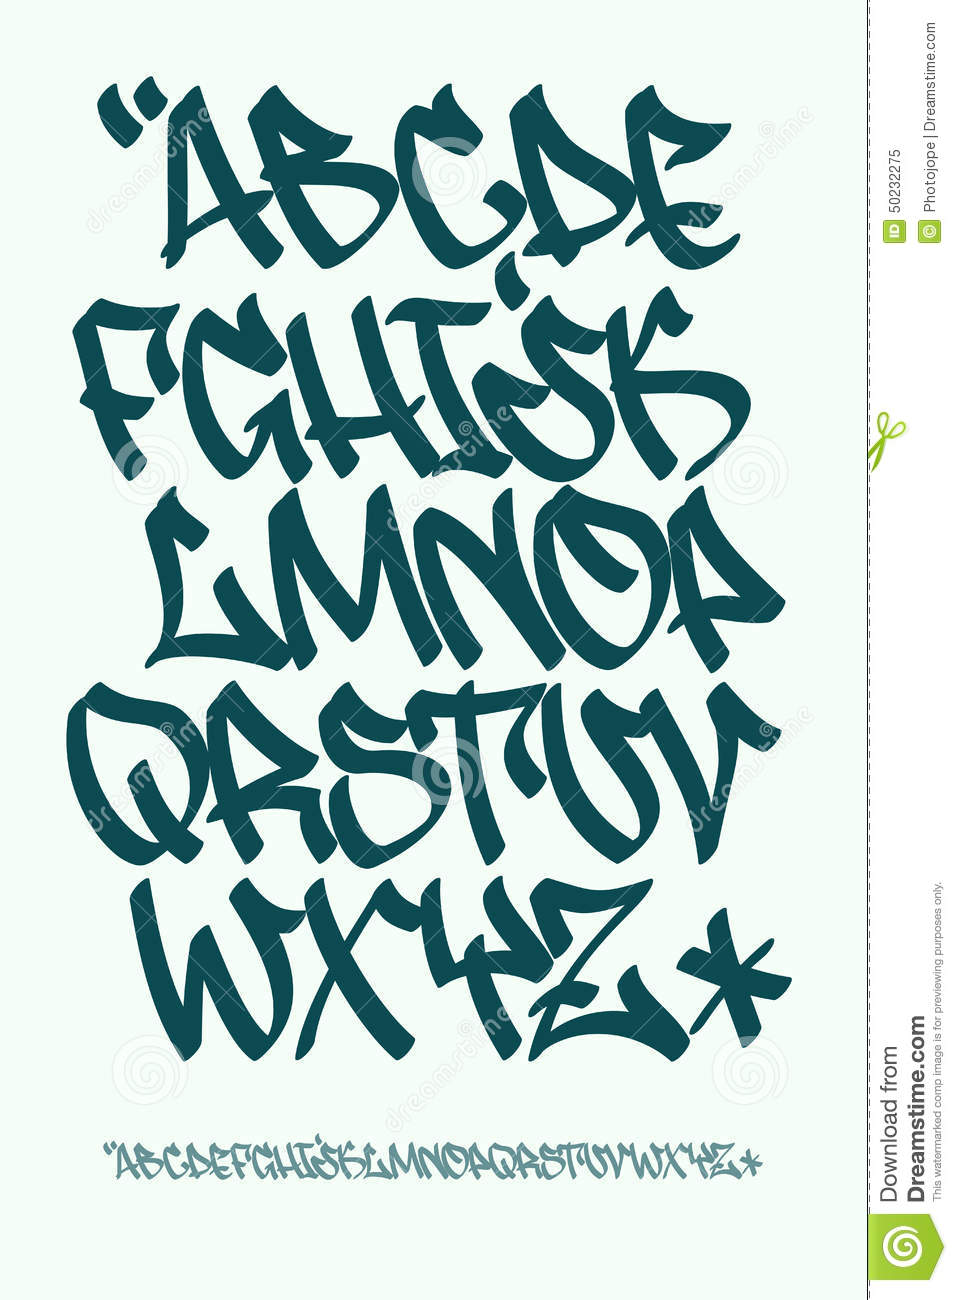 12 Capital Graffiti Alphabet Fonts Images - Cool Graffiti Alphabet